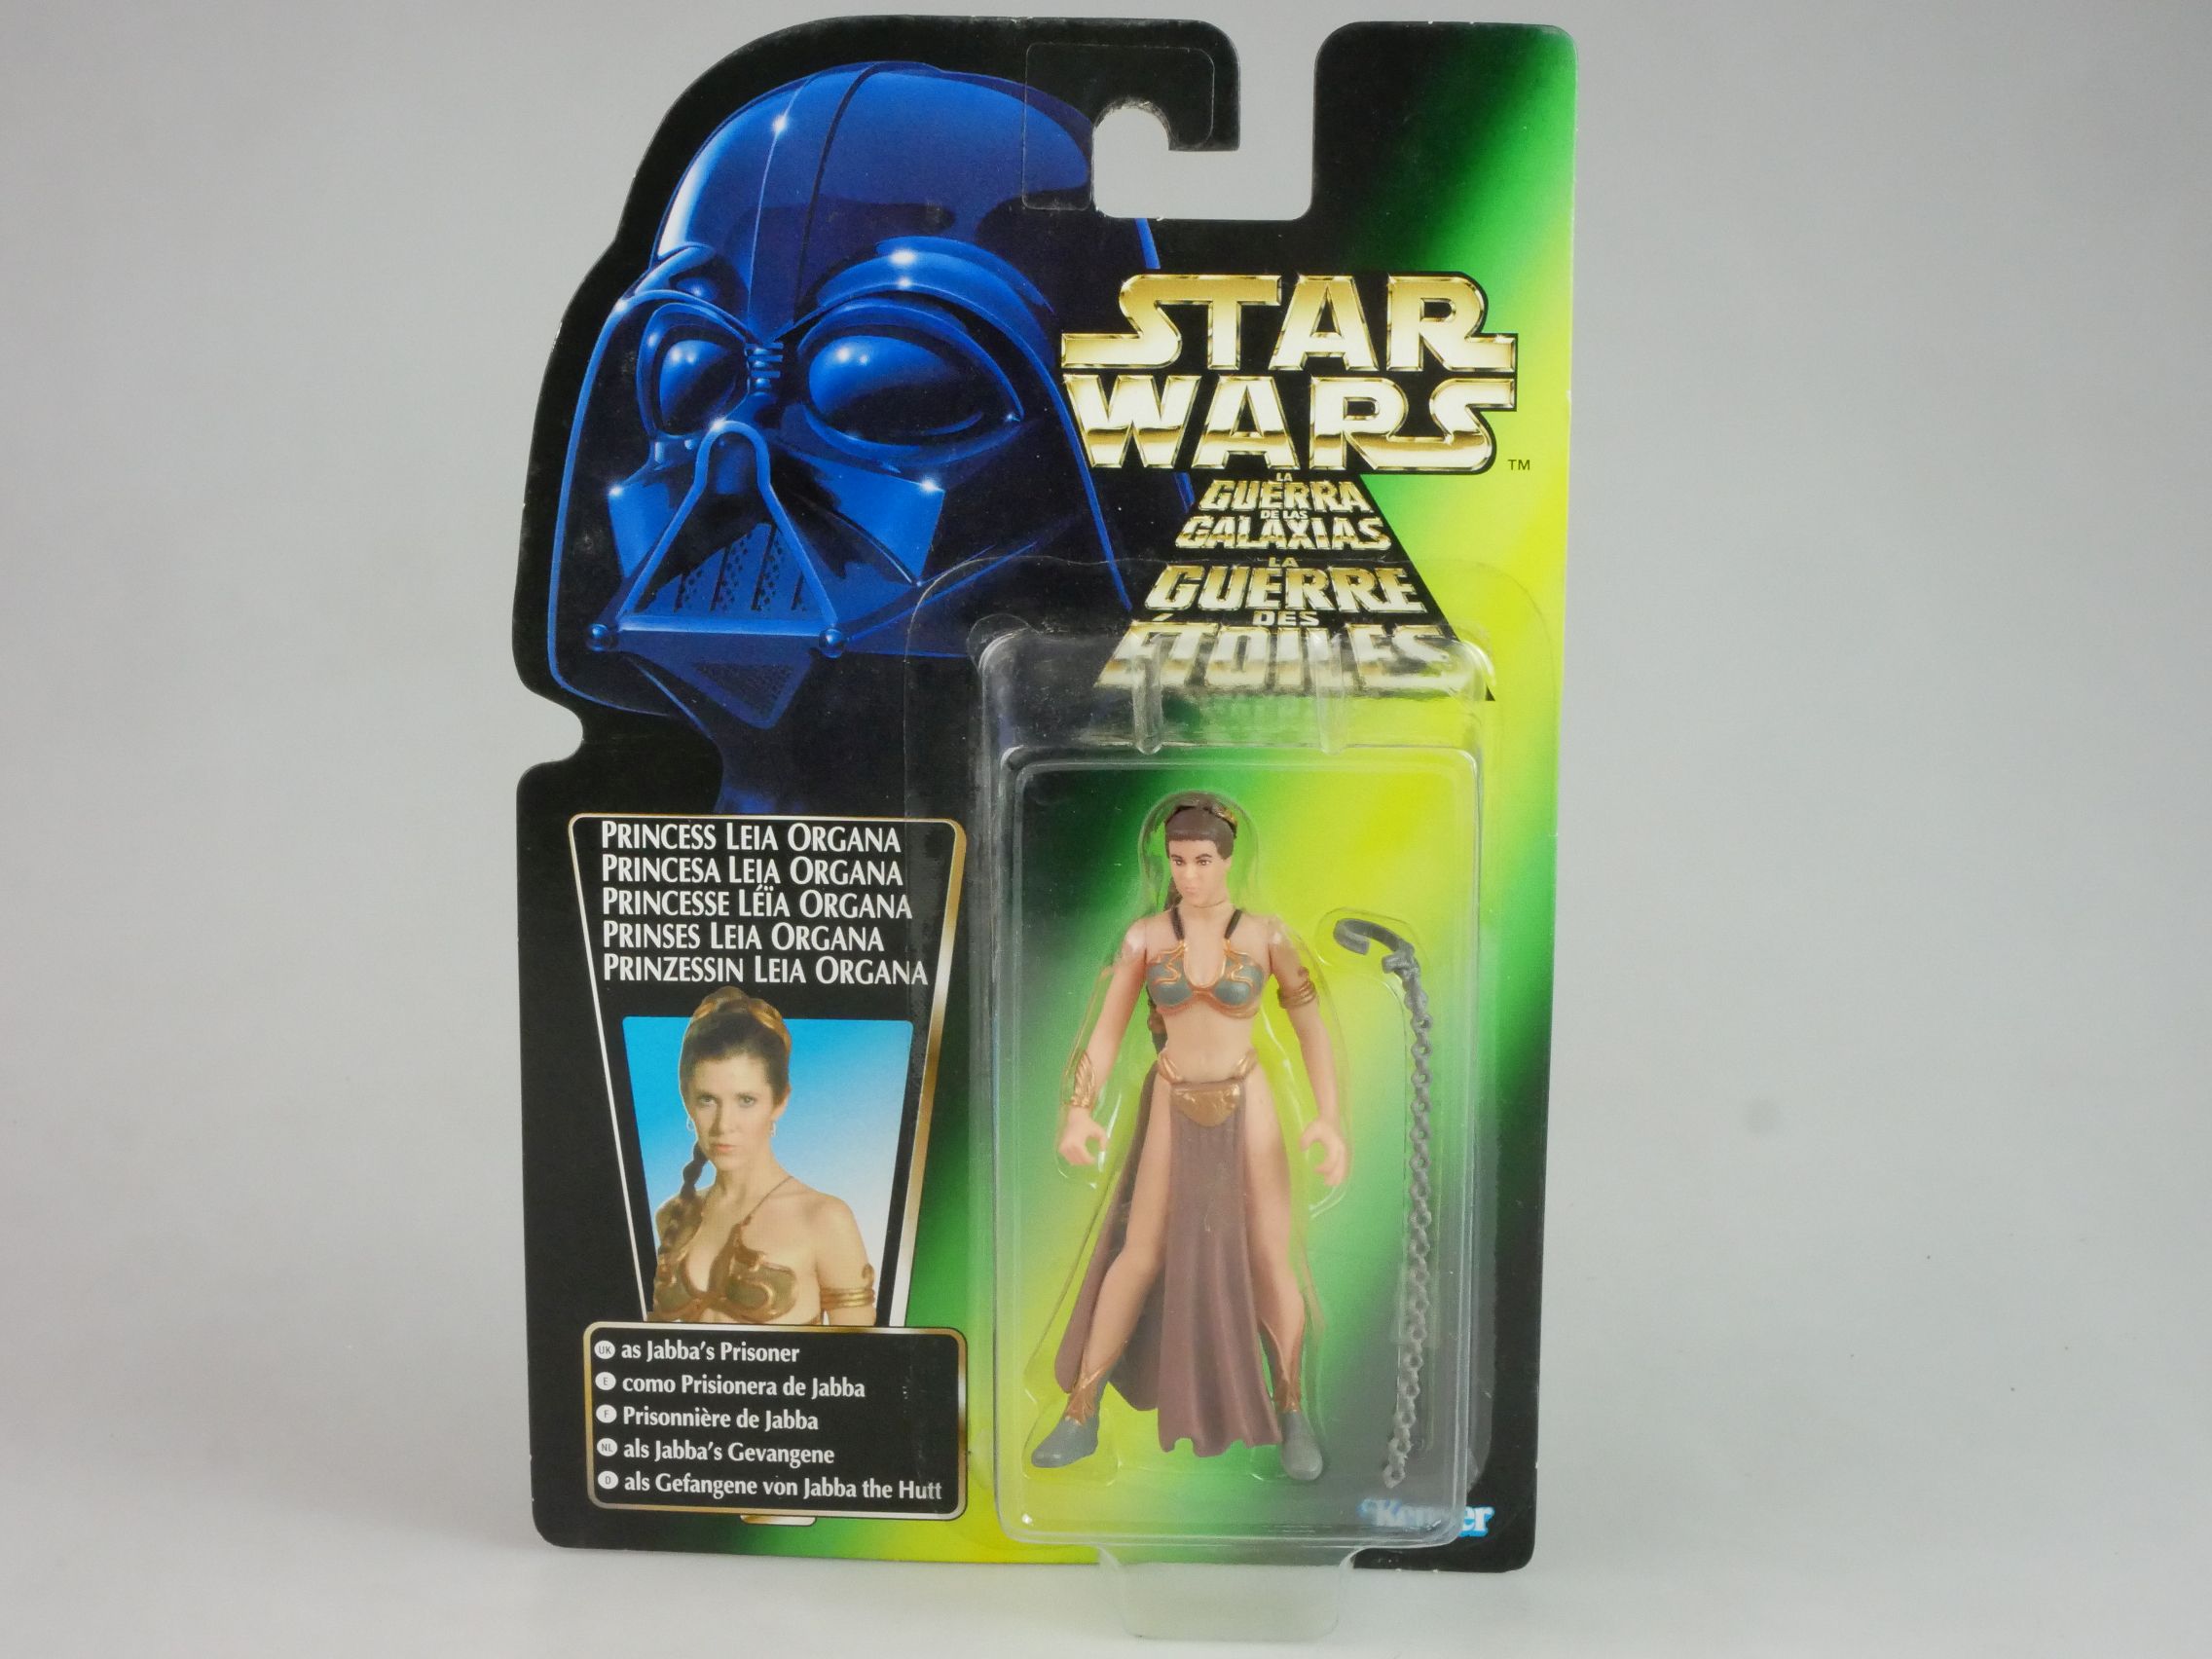 Kenner Star Wars POTF Princess Leia Organa Jabbas Gefangene 1997 Blister 125837